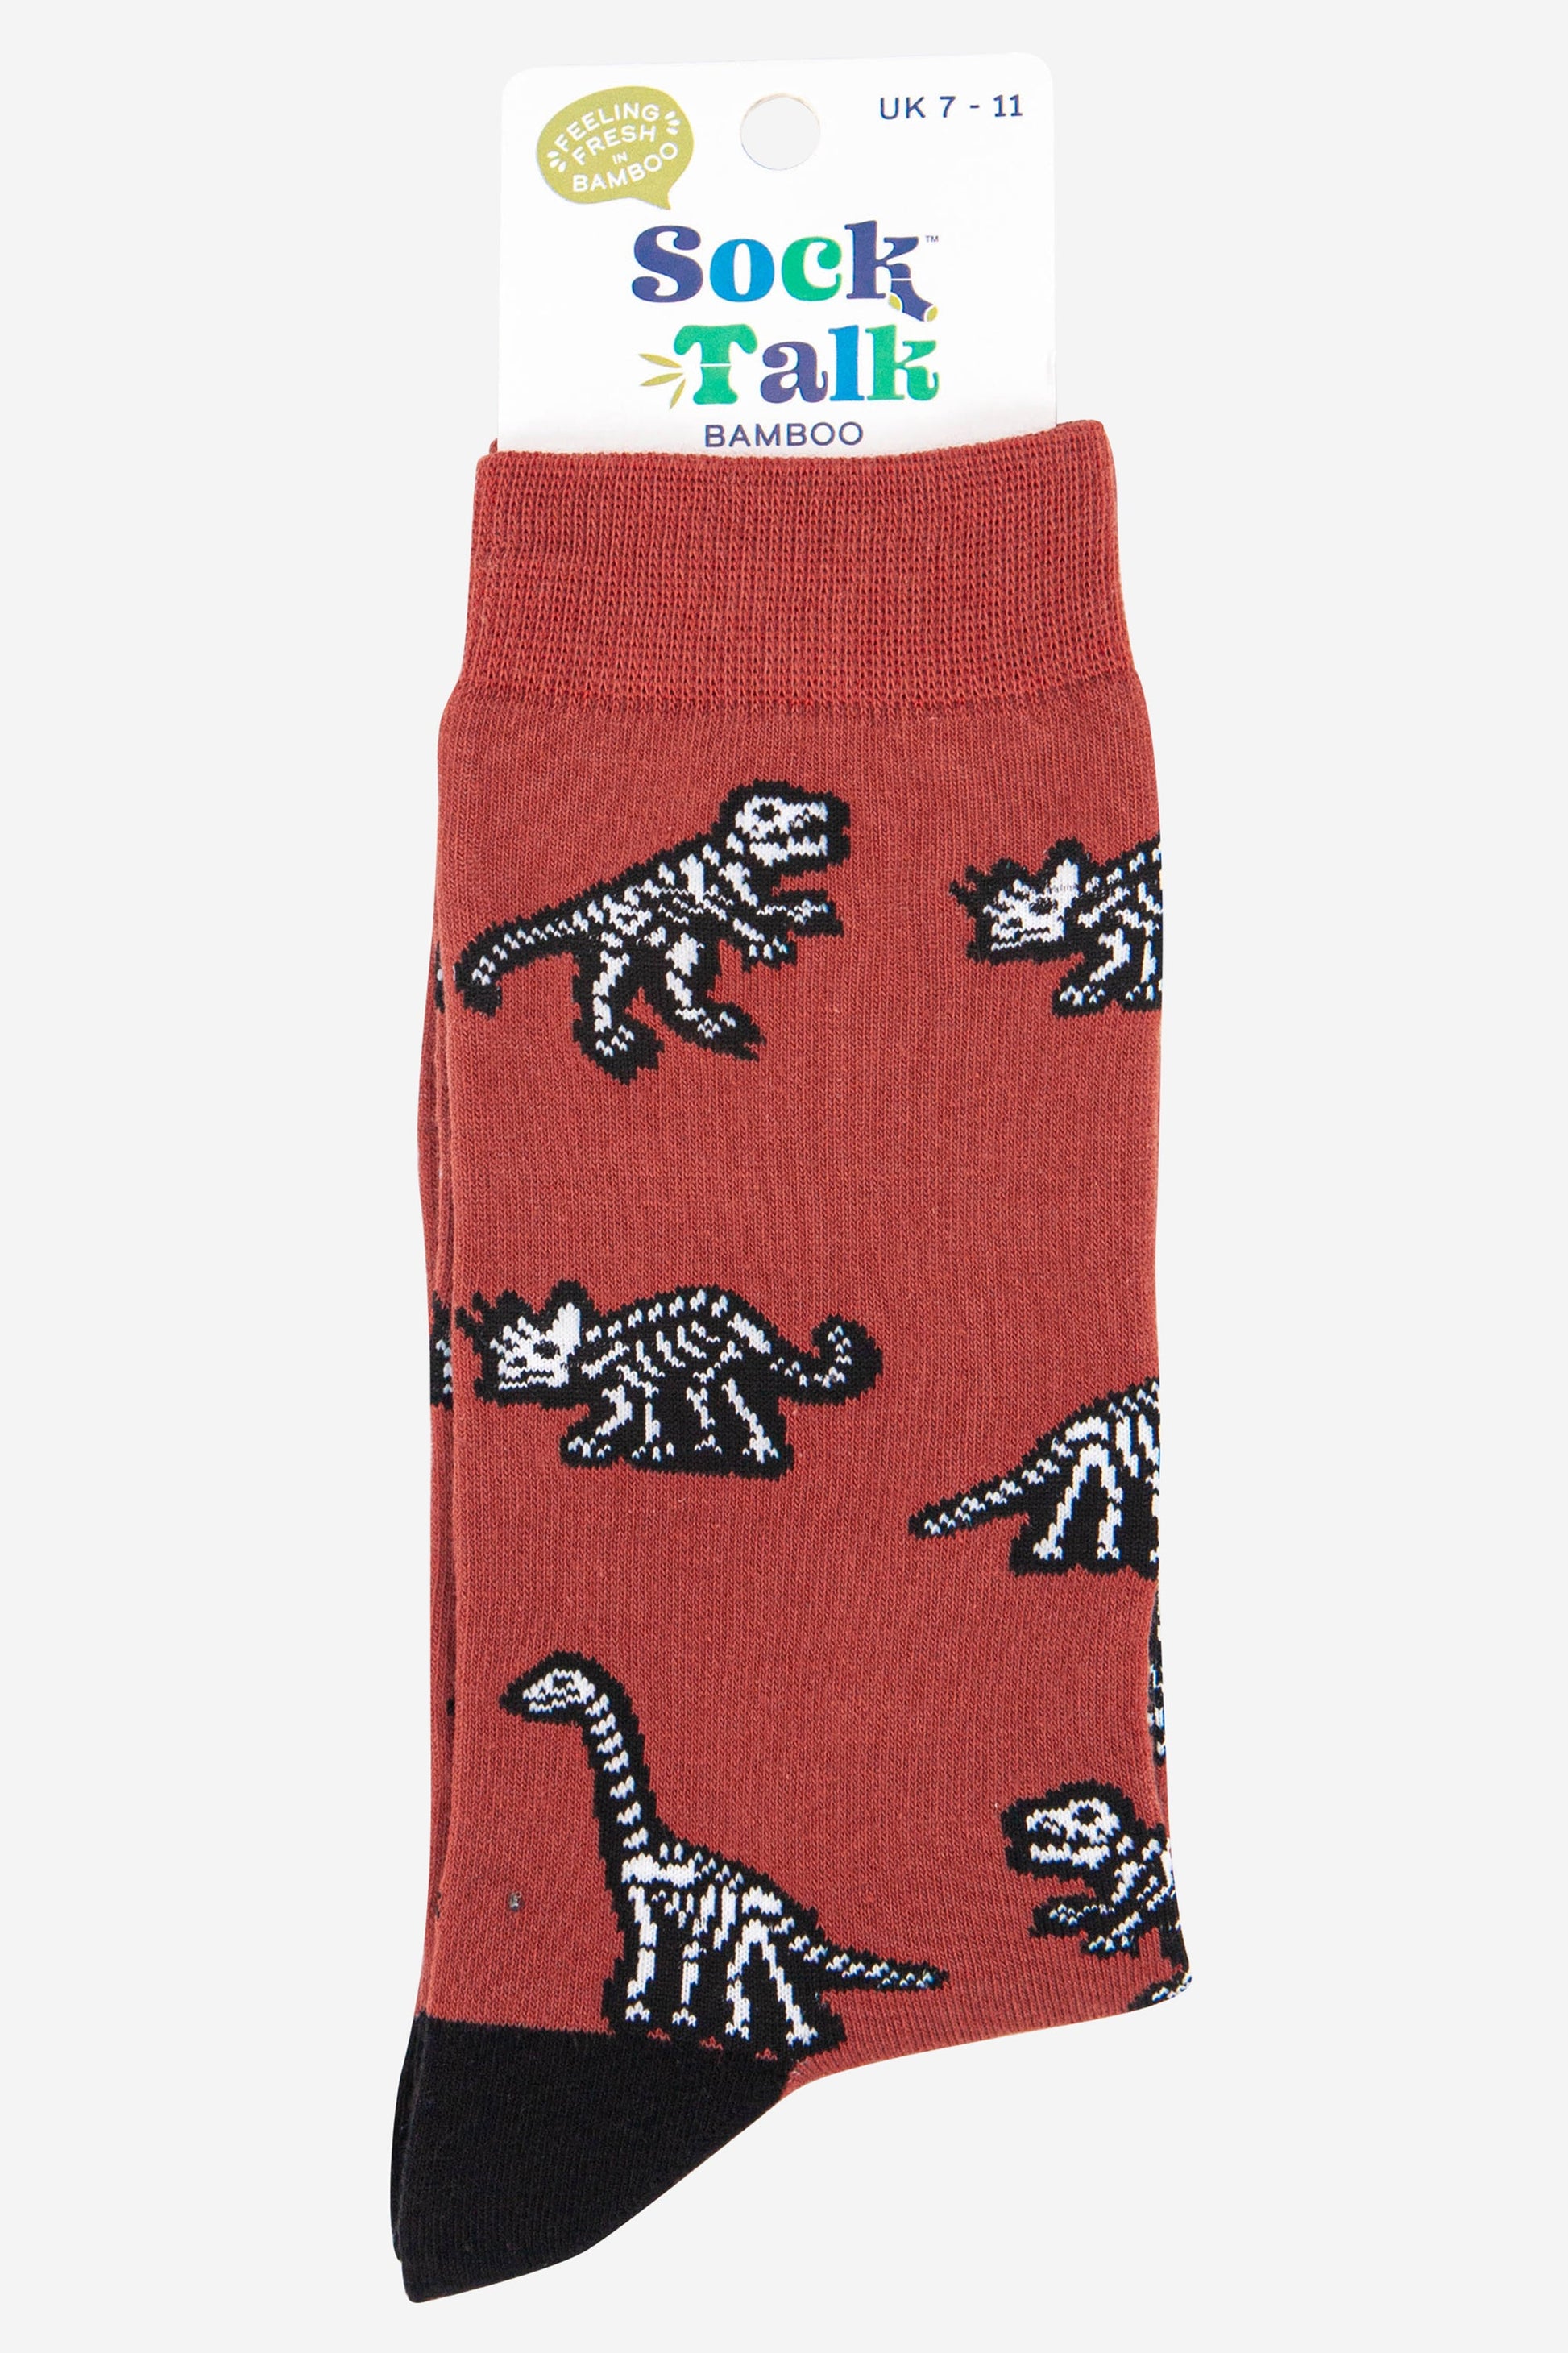 mens bamboo dinosaur bones bamboo dress socks uk size 7-11